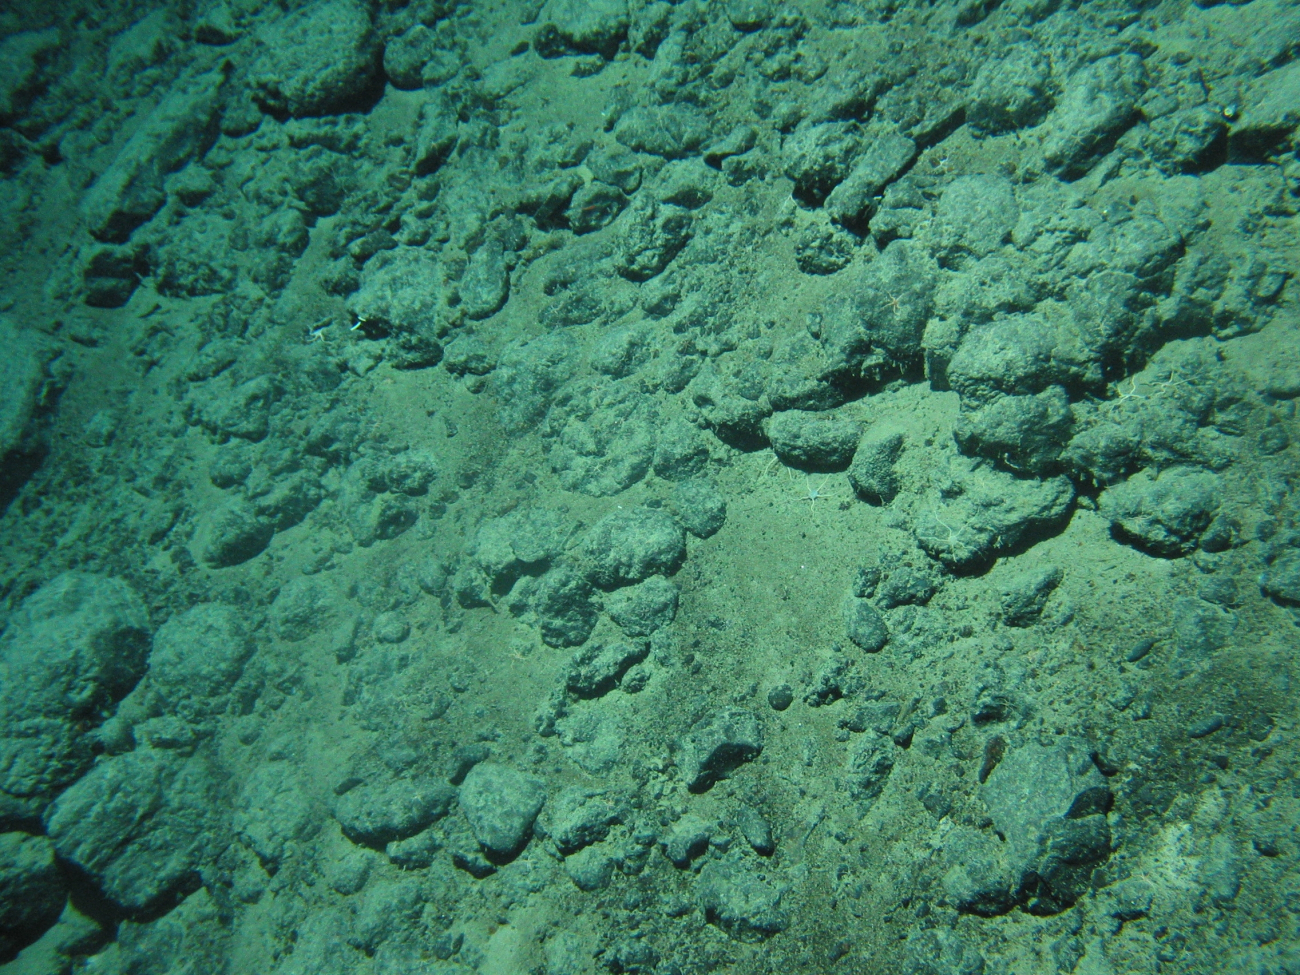 Basalt boulders with a few random brittle stars